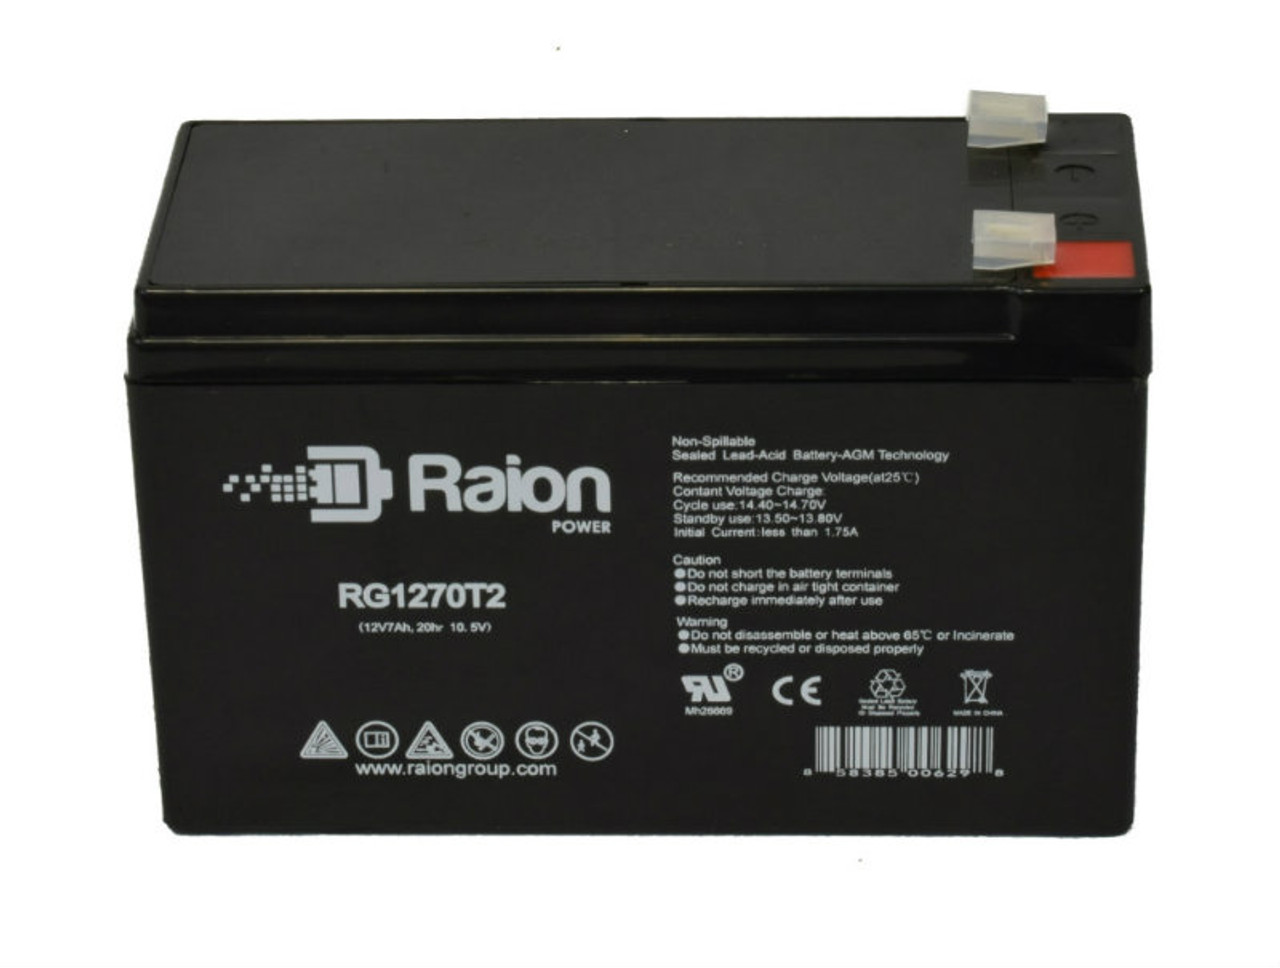 Raion Power RG1270T2 12V 7Ah Lead Acid Battery for TOBBI 12V ATV Ride On Car Electric Battery Powered